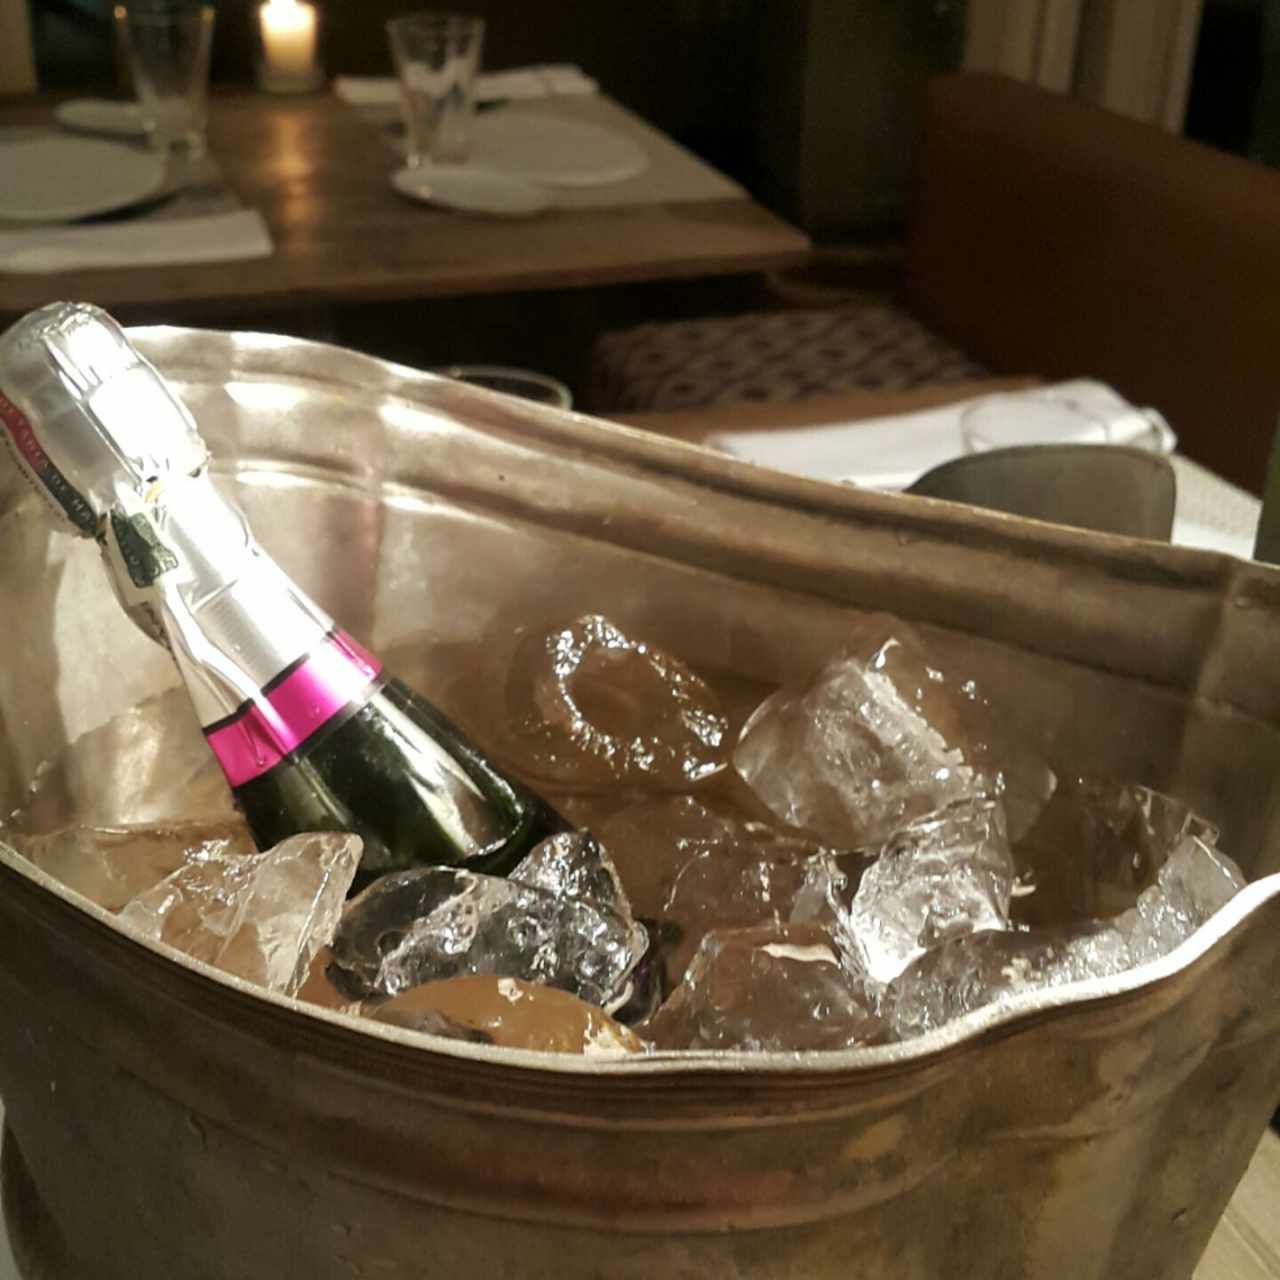 vino espumoso chandon rosé 2014